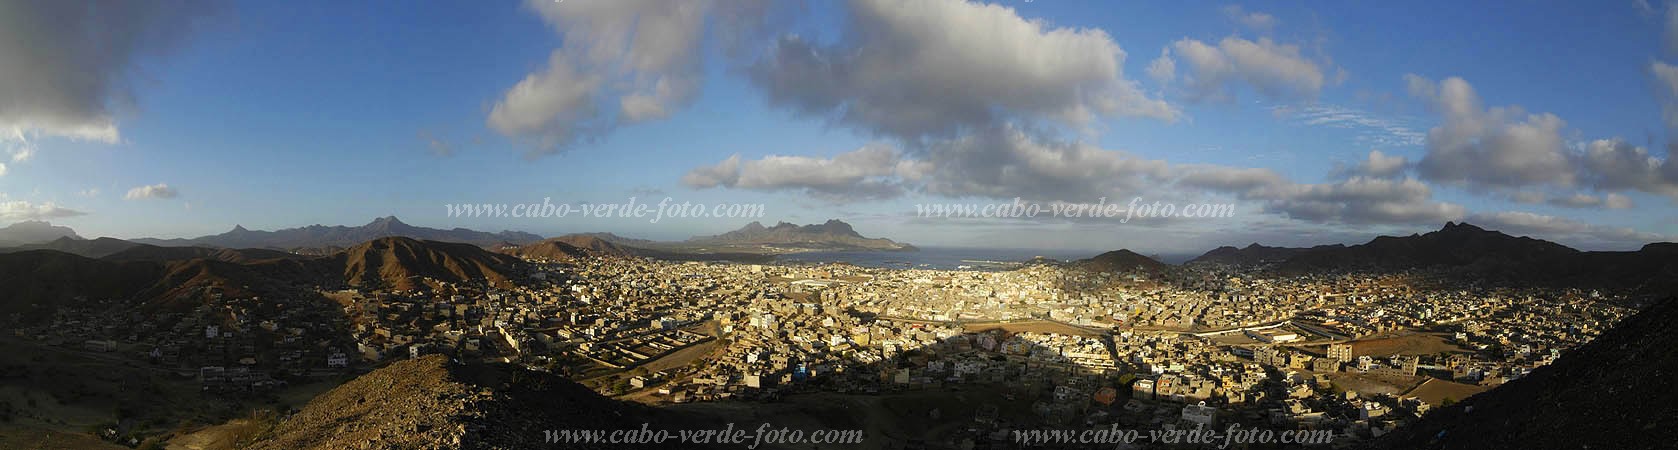 So Vicente : Pedra Rolada : town : Landscape TownCabo Verde Foto Gallery